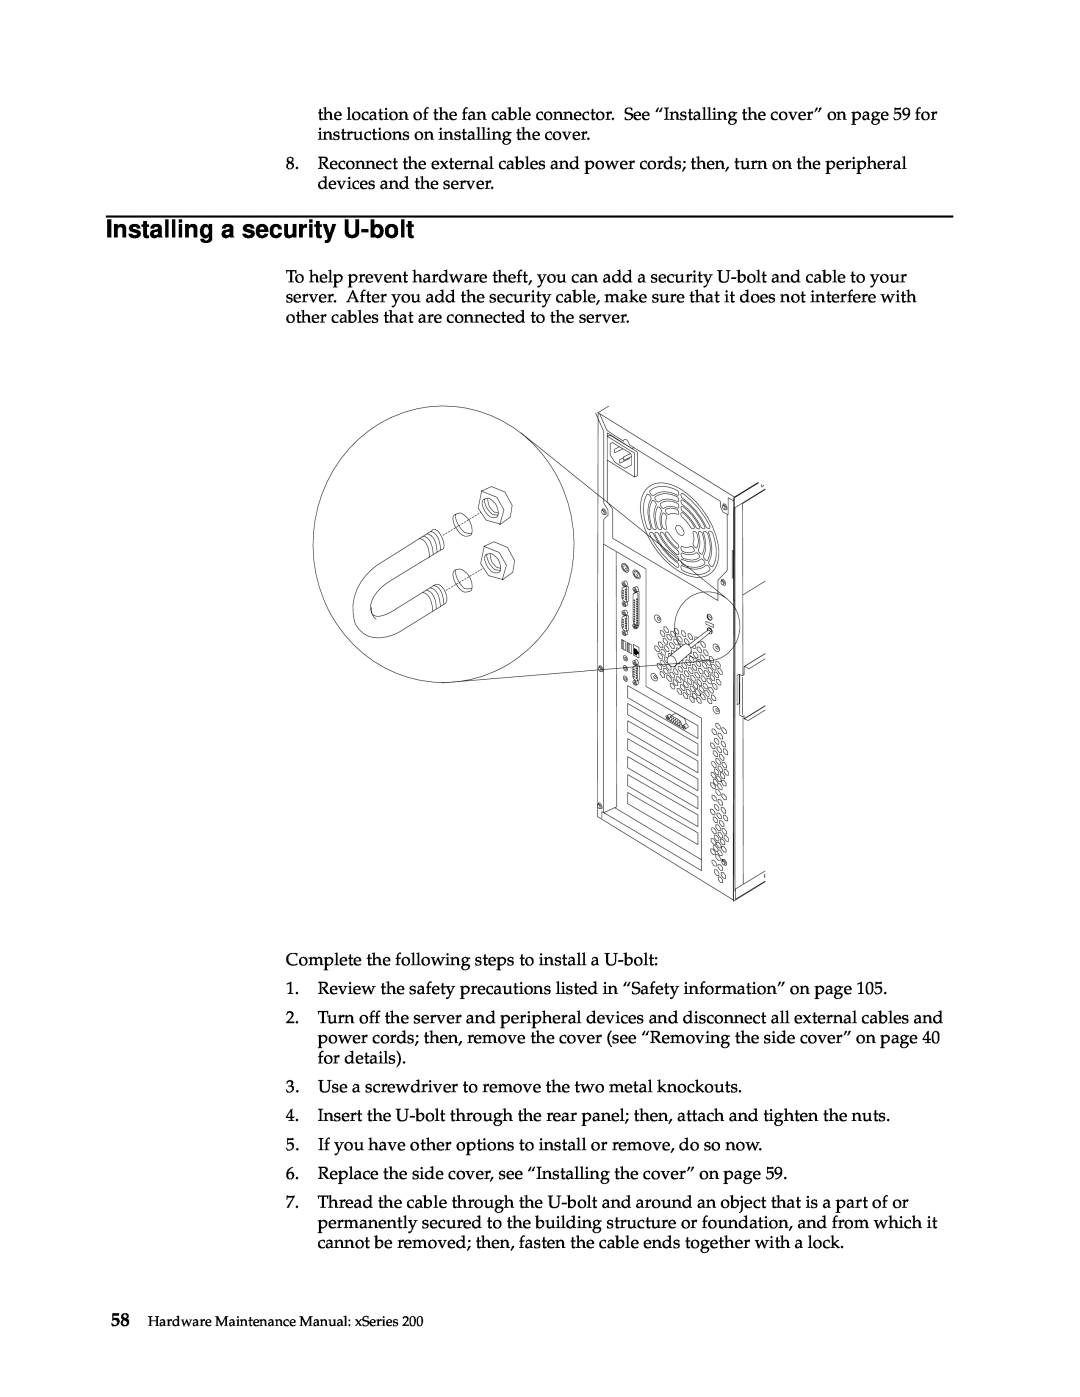 IBM x Series 200 manual Installing a security U-bolt, Hardware Maintenance Manual xSeries 